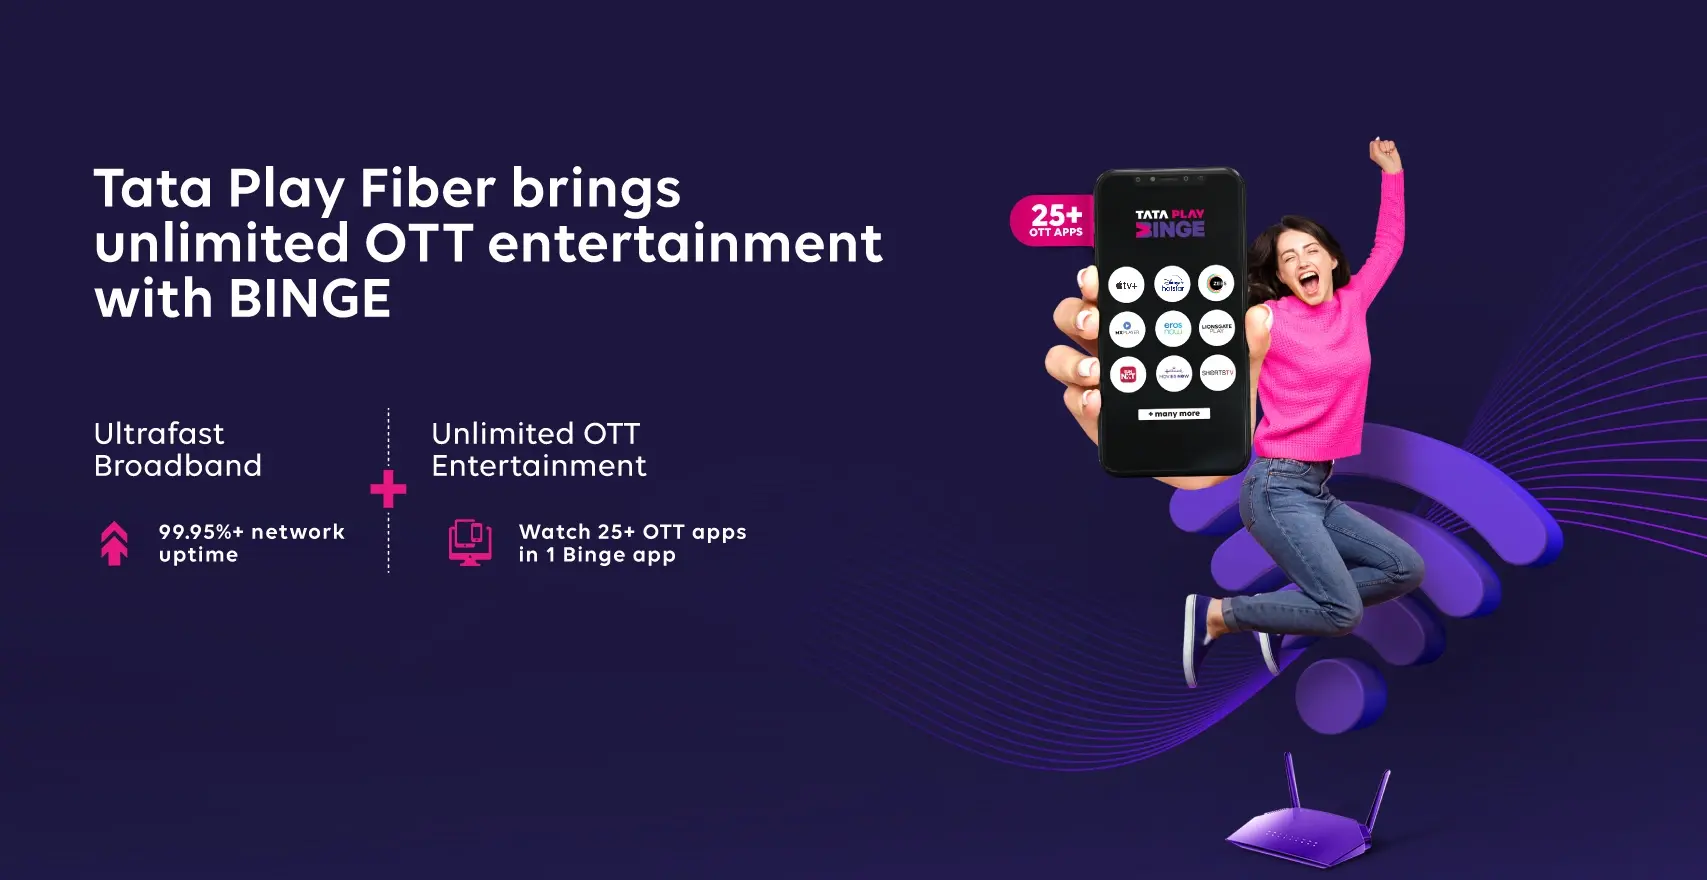 Tata Play Fiber brings unlimited OTT Entertainment with BINGE